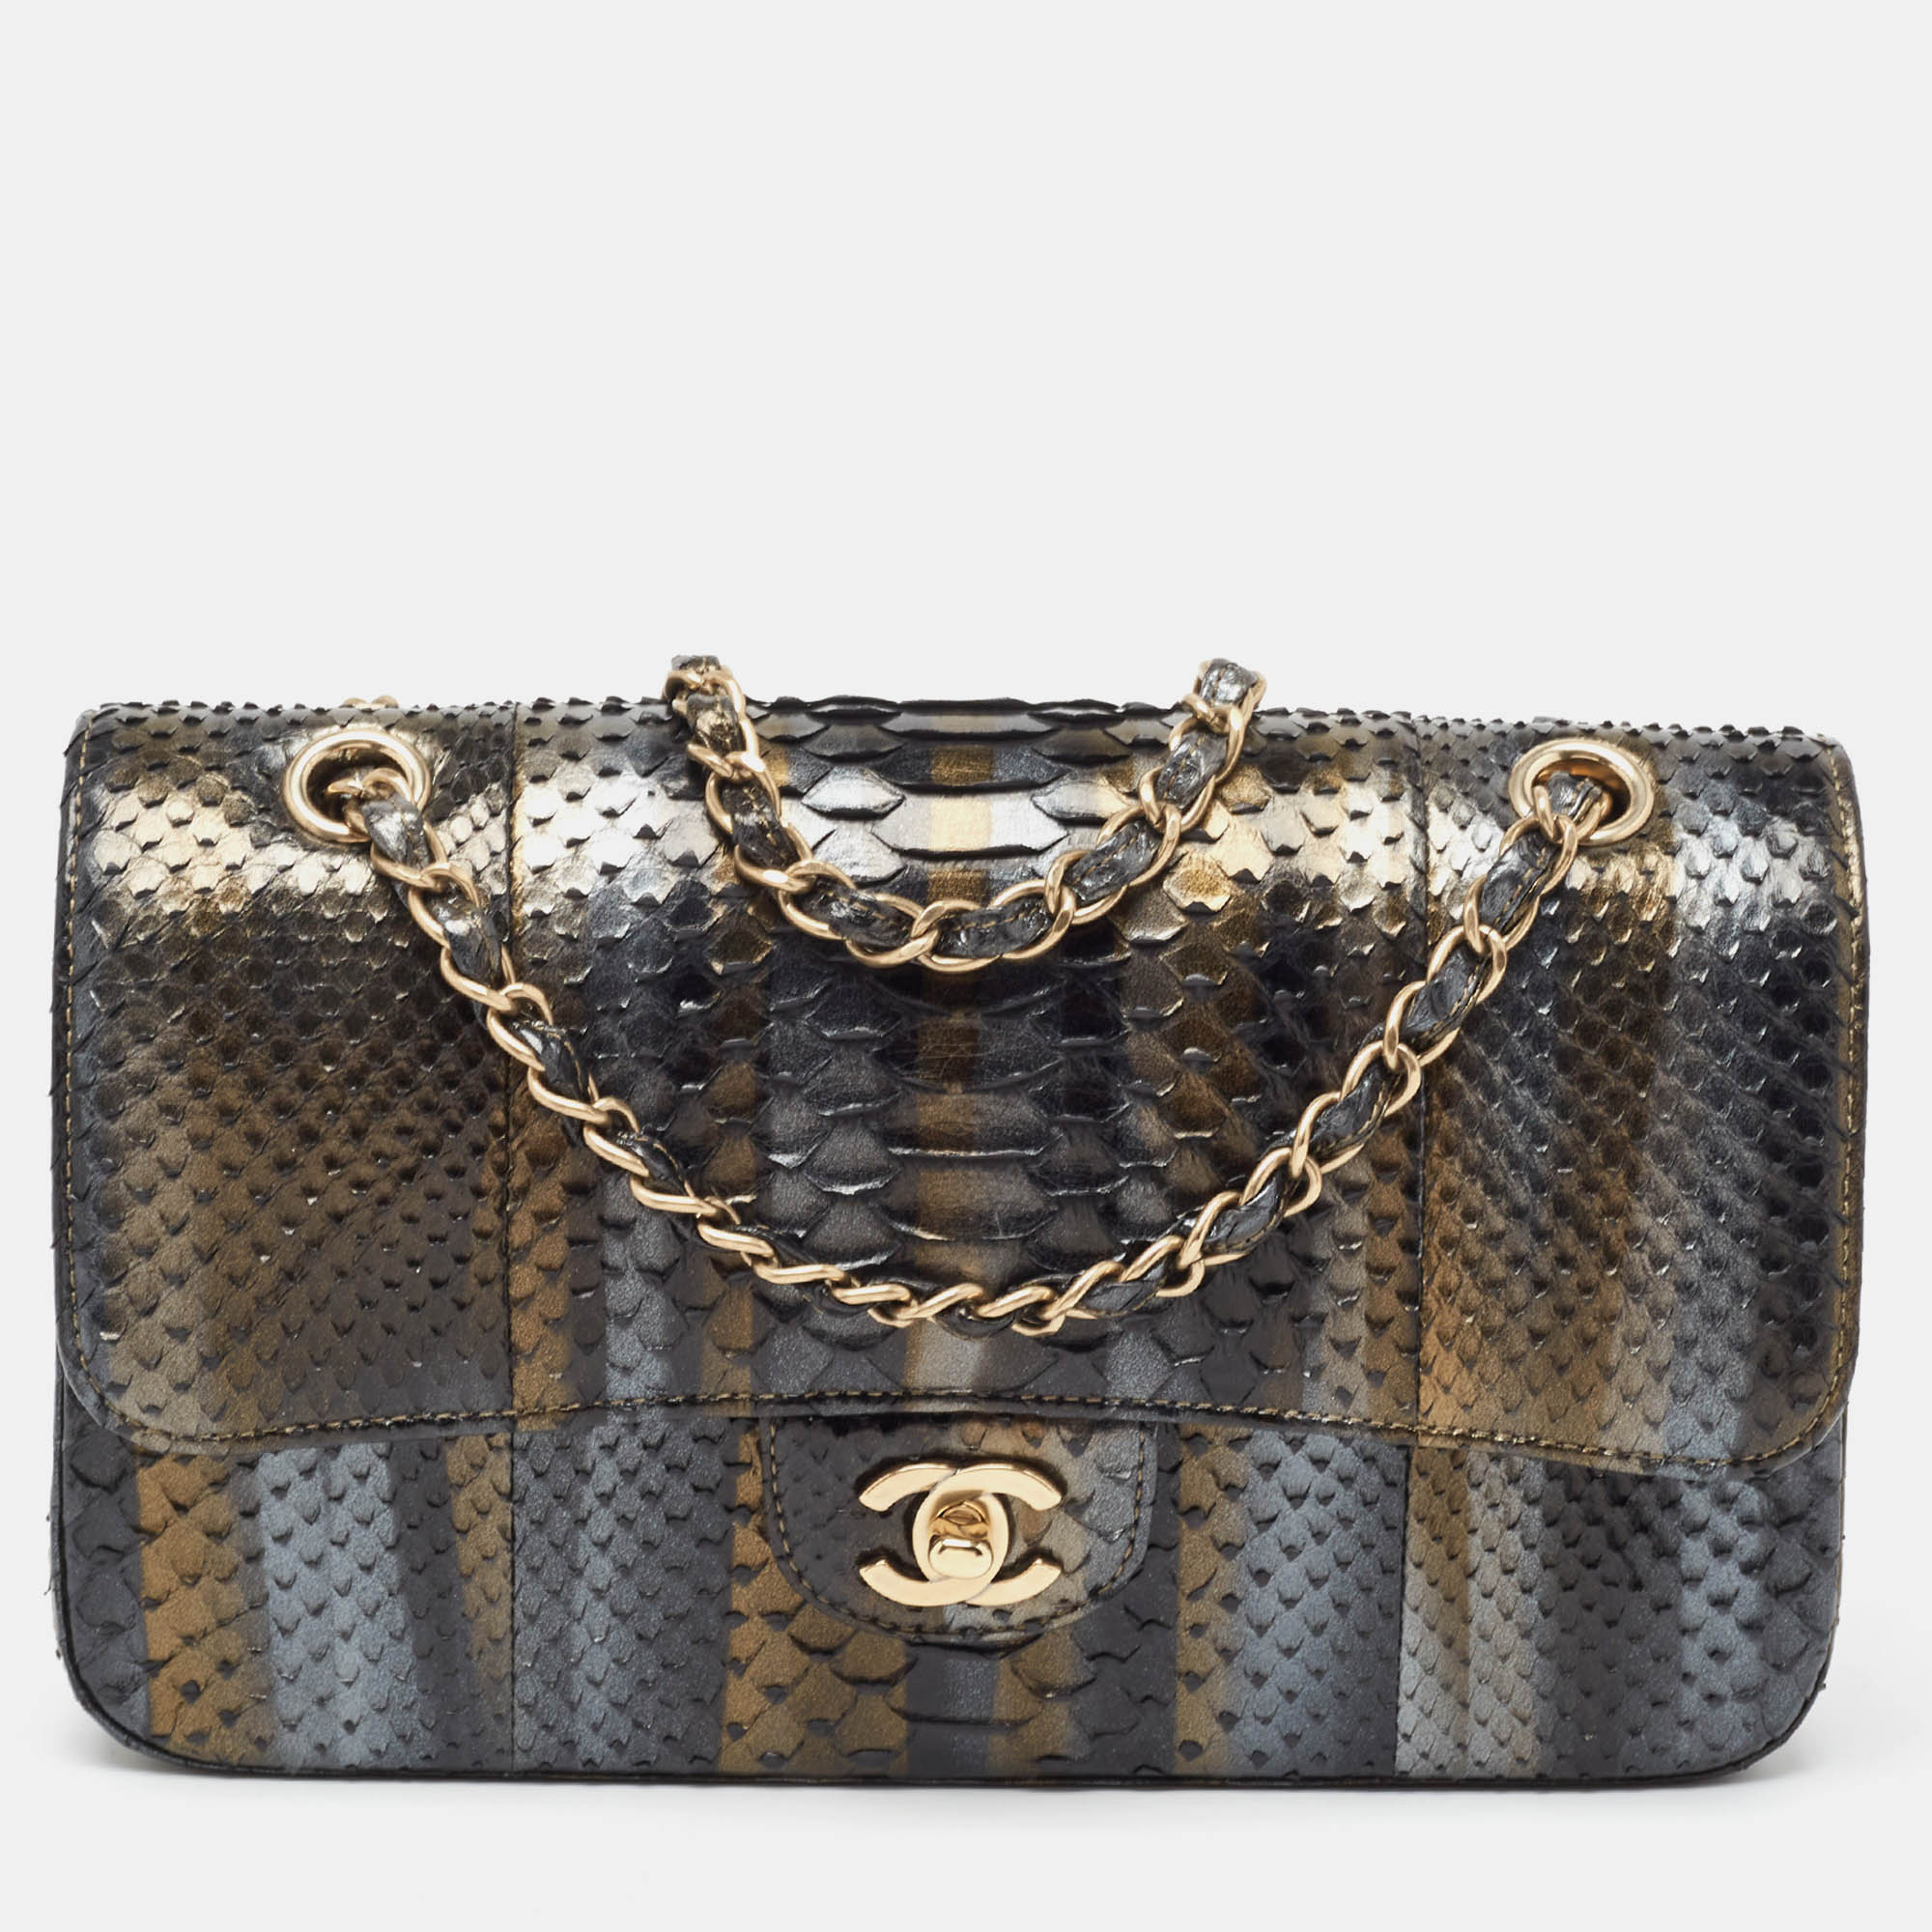 Chanel metallic tricolor python medium classic double flap bag